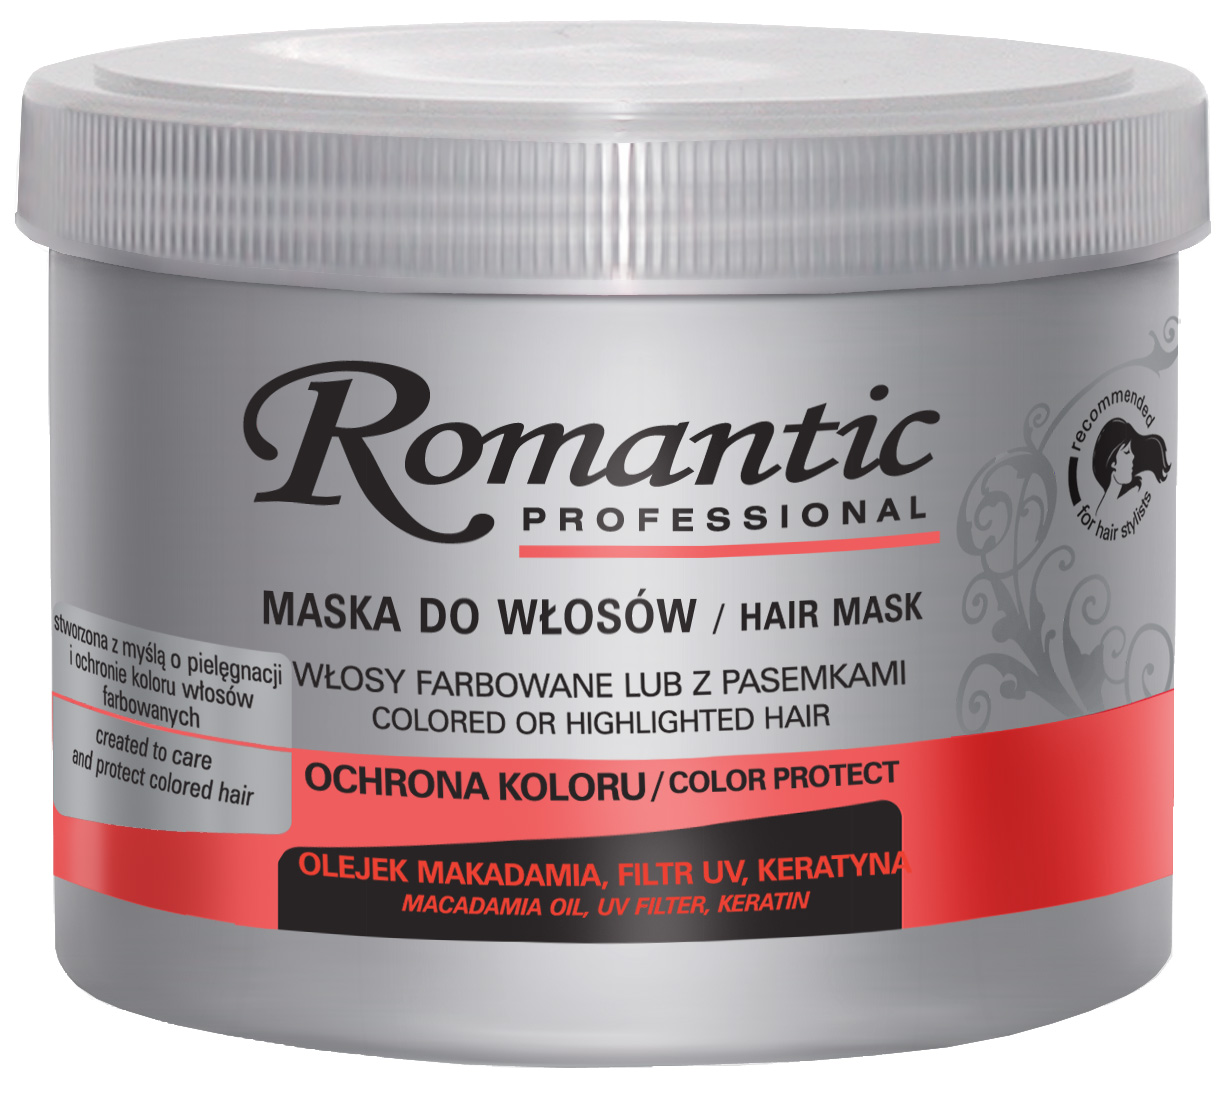 Romantic maska ochrona koloru 500 ml